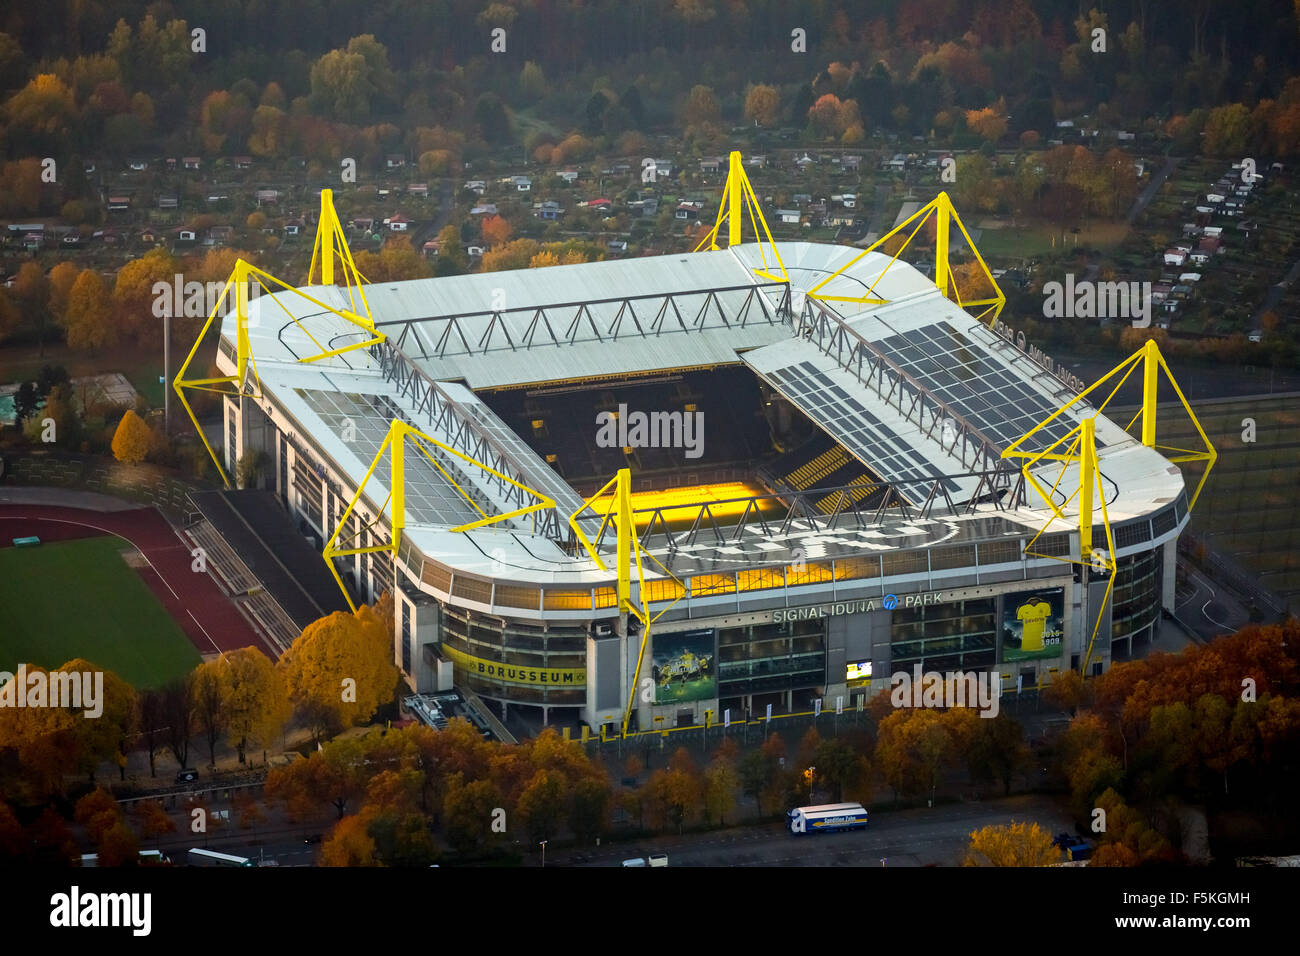 Parc Signal Iduna Signal-Iduna-Park,, BVB Borussia Dortmund, O9, stade avec chauffage Gazon, national league football club Banque D'Images